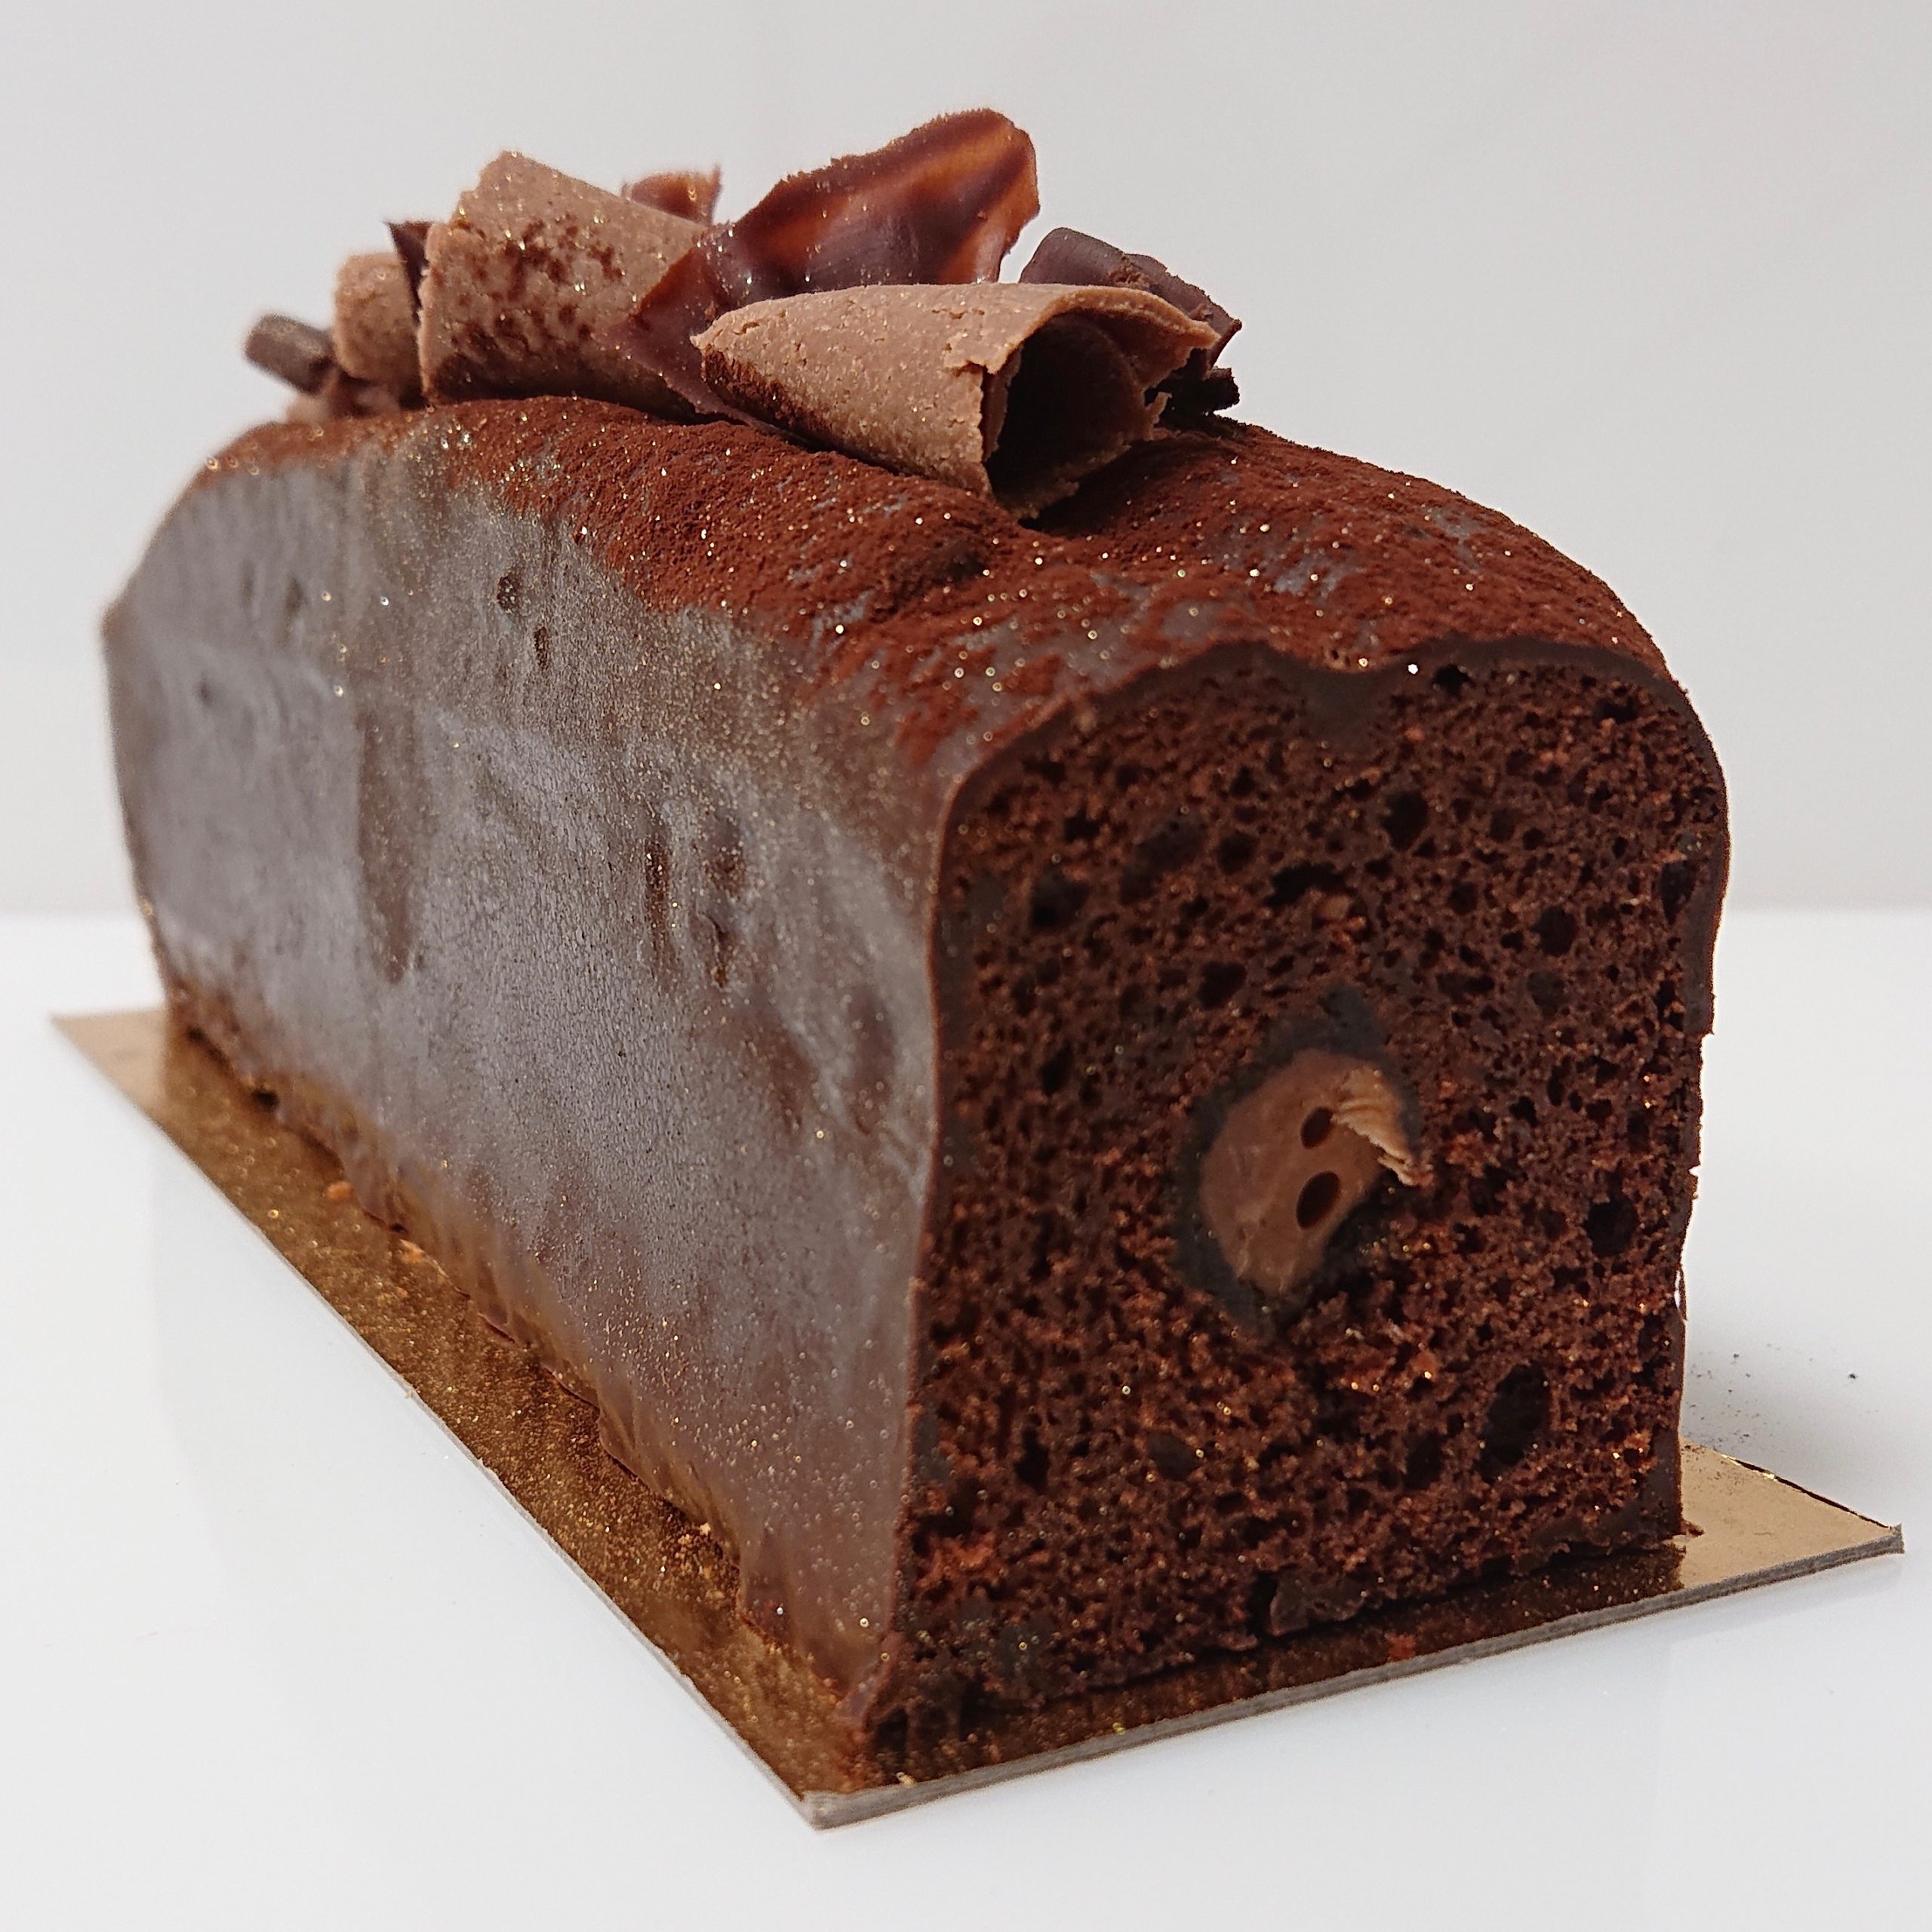 Cake au chocolat coeur Gianduja 8,90 €